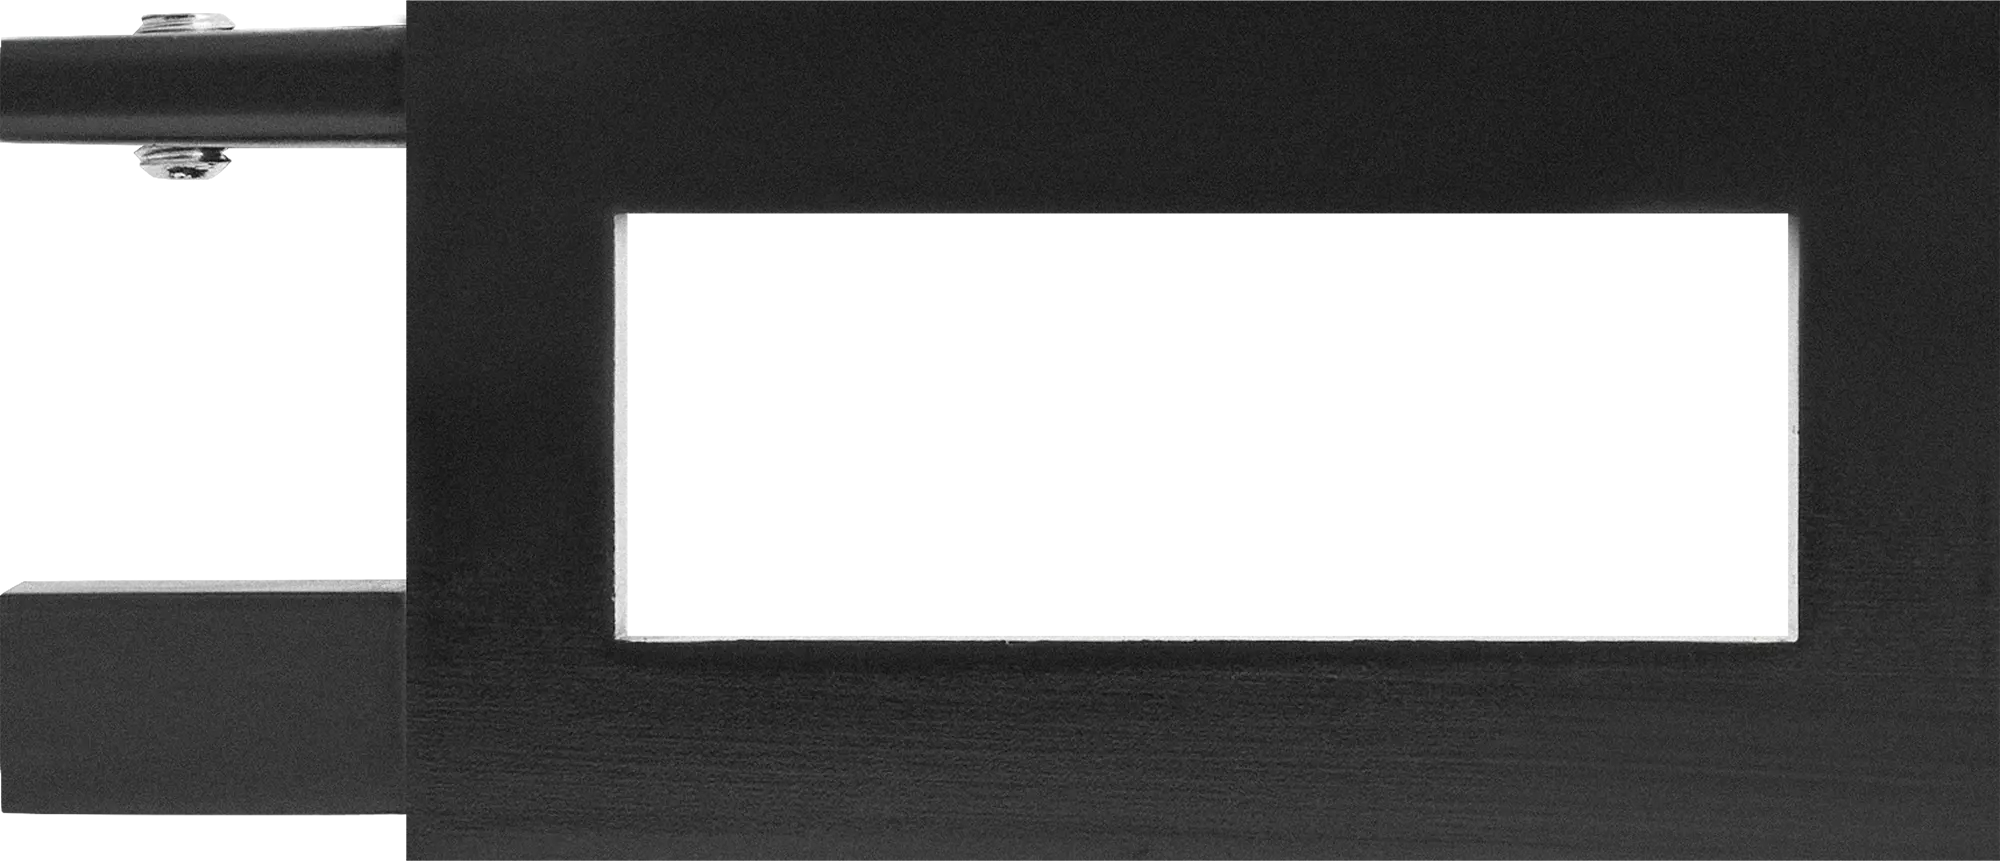 Наконечник Квадро Симпл Inspire металл цвет черный 4 см 2 шт. шкаф купе симпл стандарт дуб сонома светлый 2100 мм